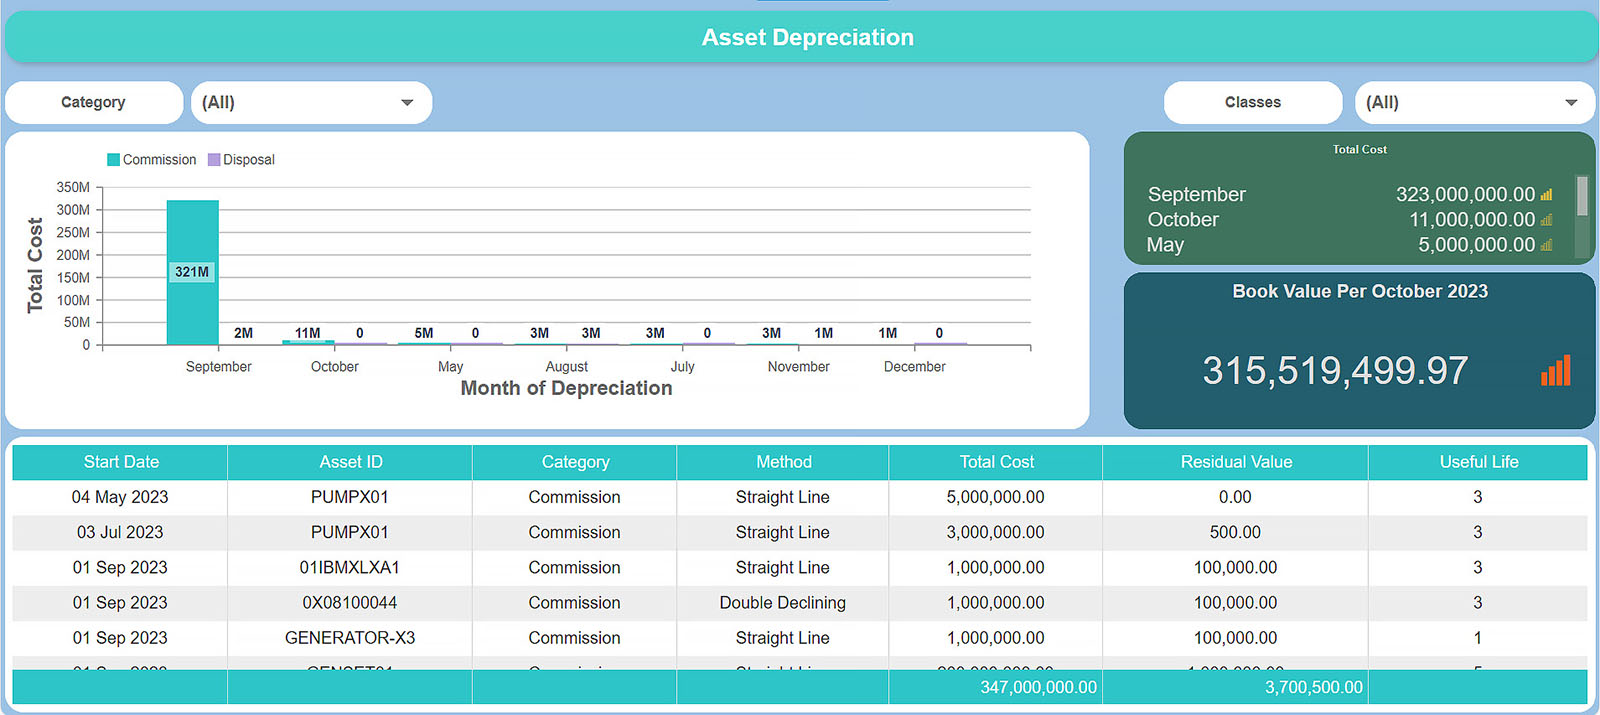 Asset Depreciation Dashboard_2